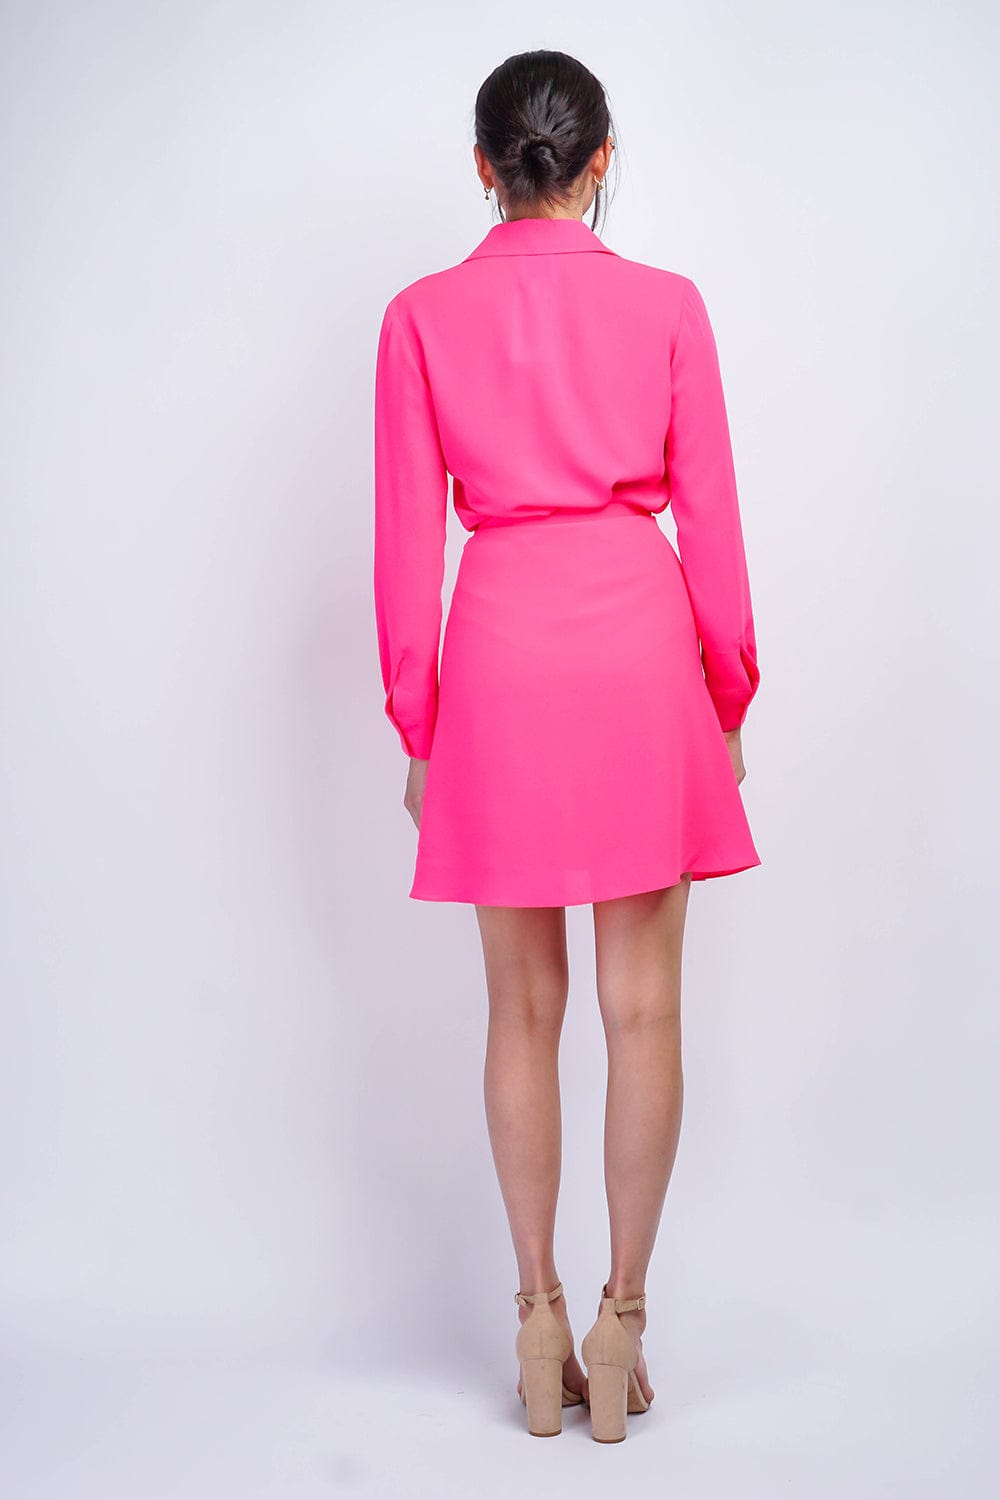 BOTTOMS Barbie Pink Wrapped Kree Skirt - Chloe Dao